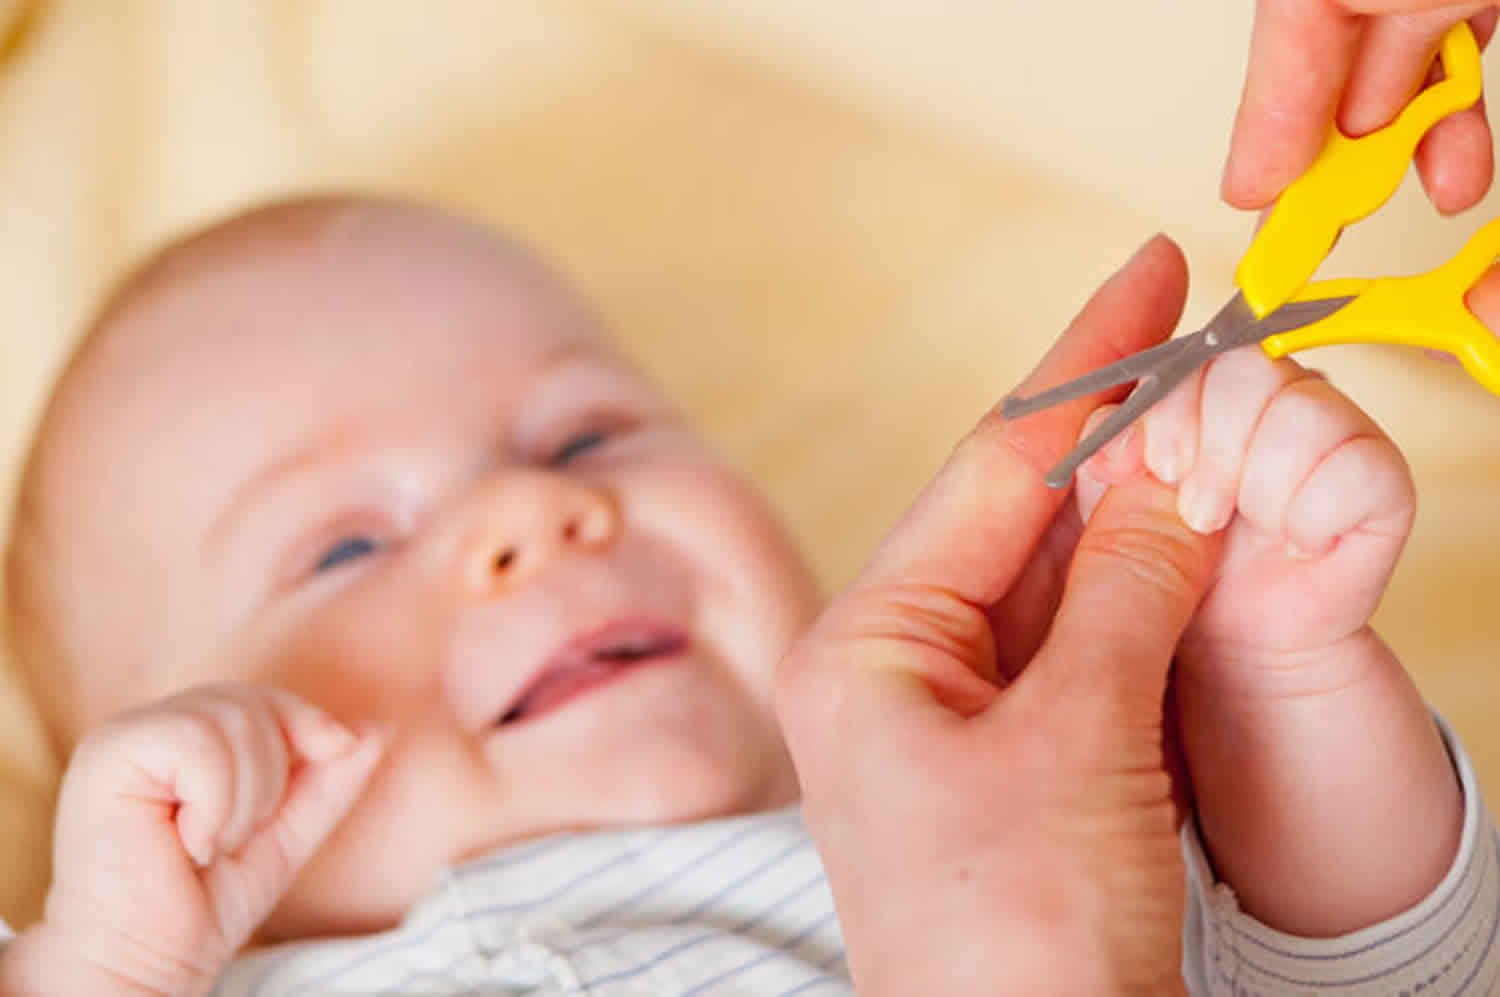 Cutting or clipping newborn nails